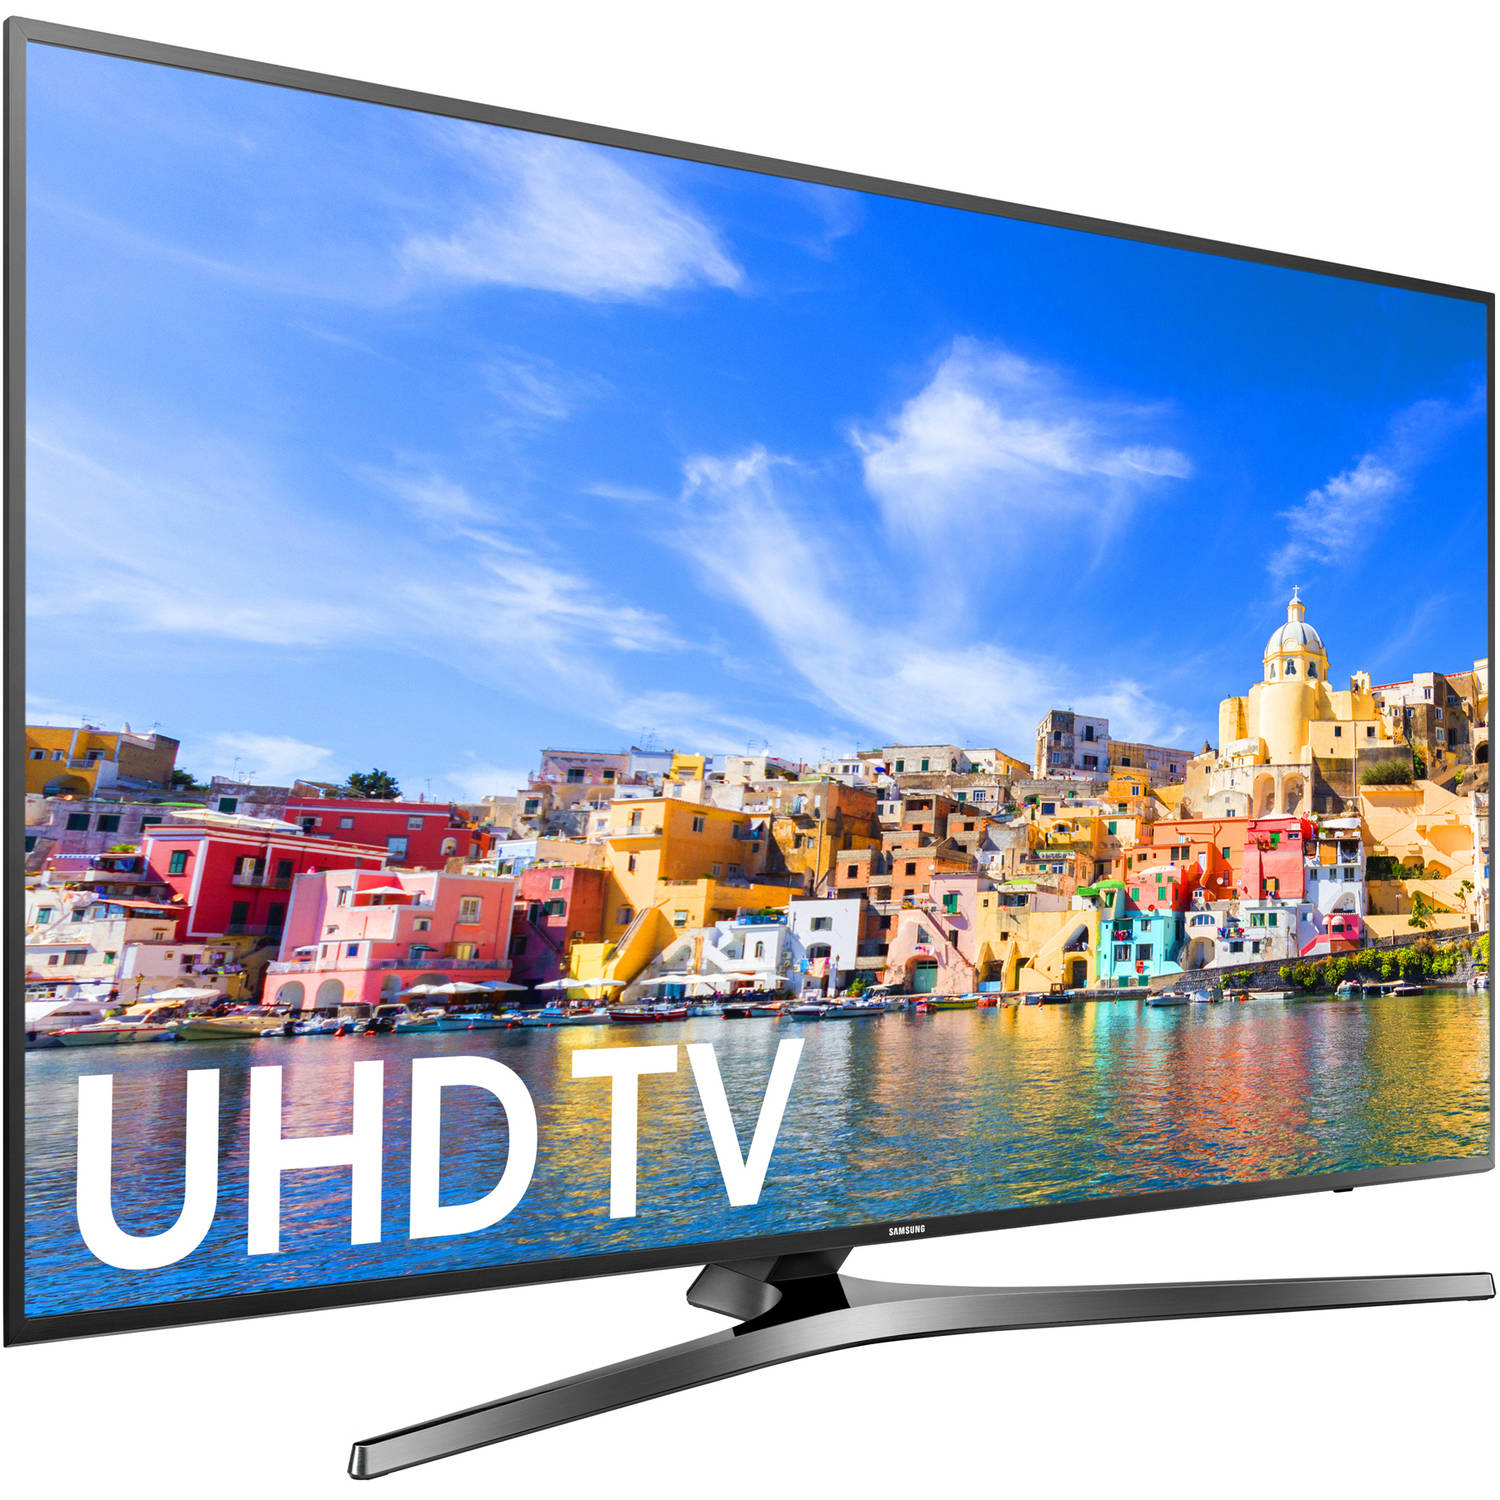 Samsung 7000 UN65KU7000F 65" 2160p LED-LCD TV - 16:9 - 4K UHDTV - image 3 of 7